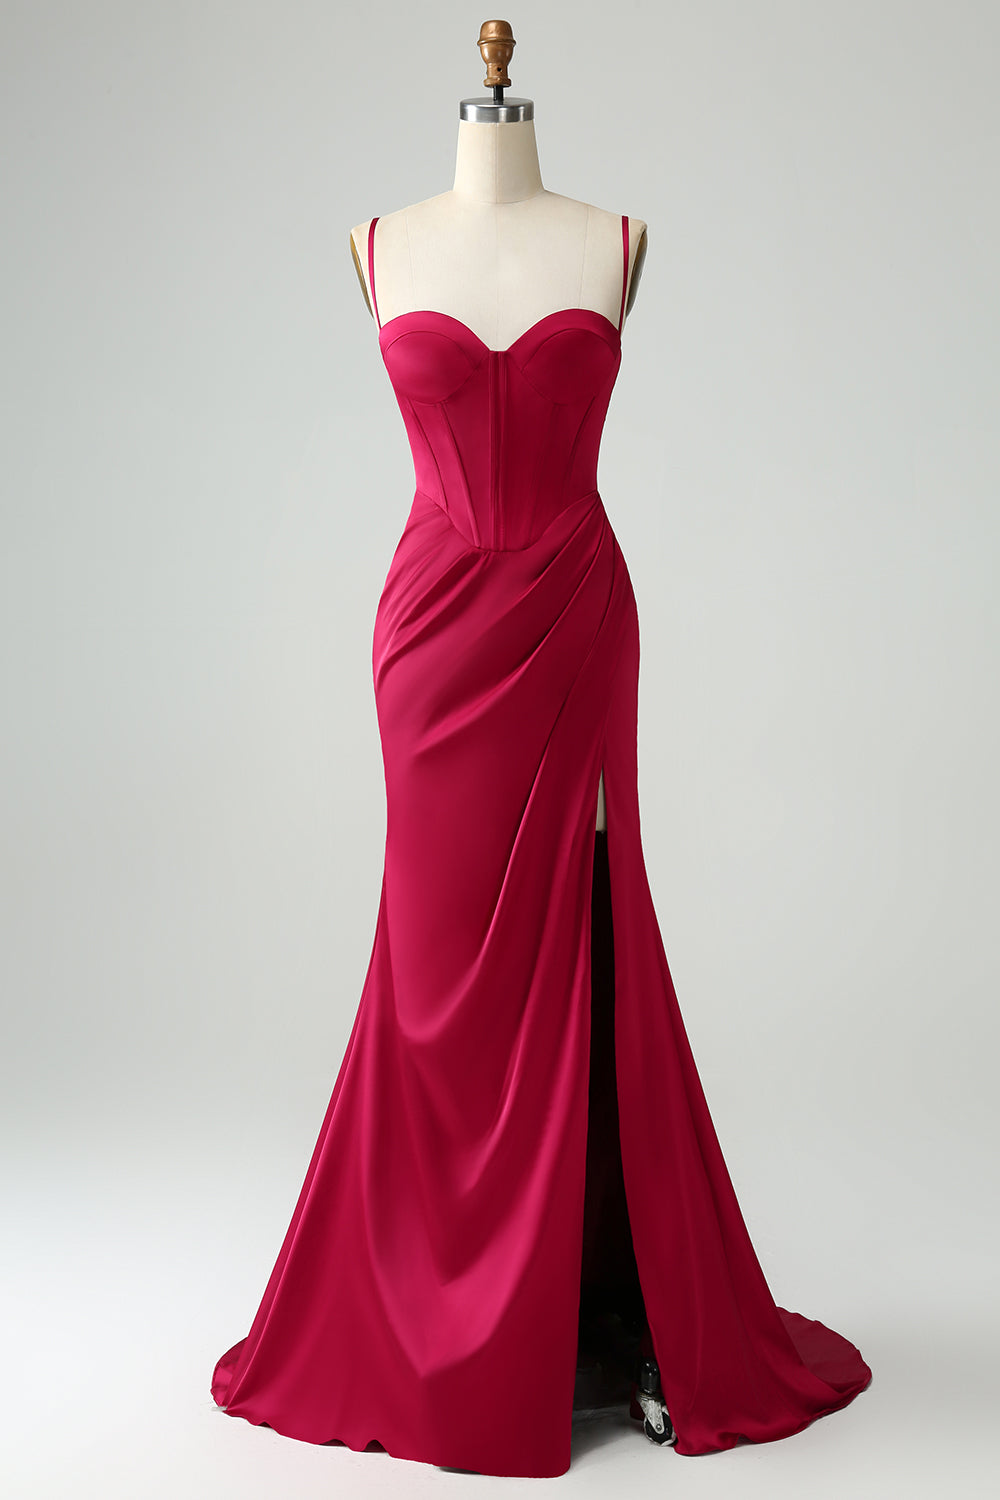 Sweetheart Corset Burgundy Lace Up Sheath Floor-Length Dress with High Slit